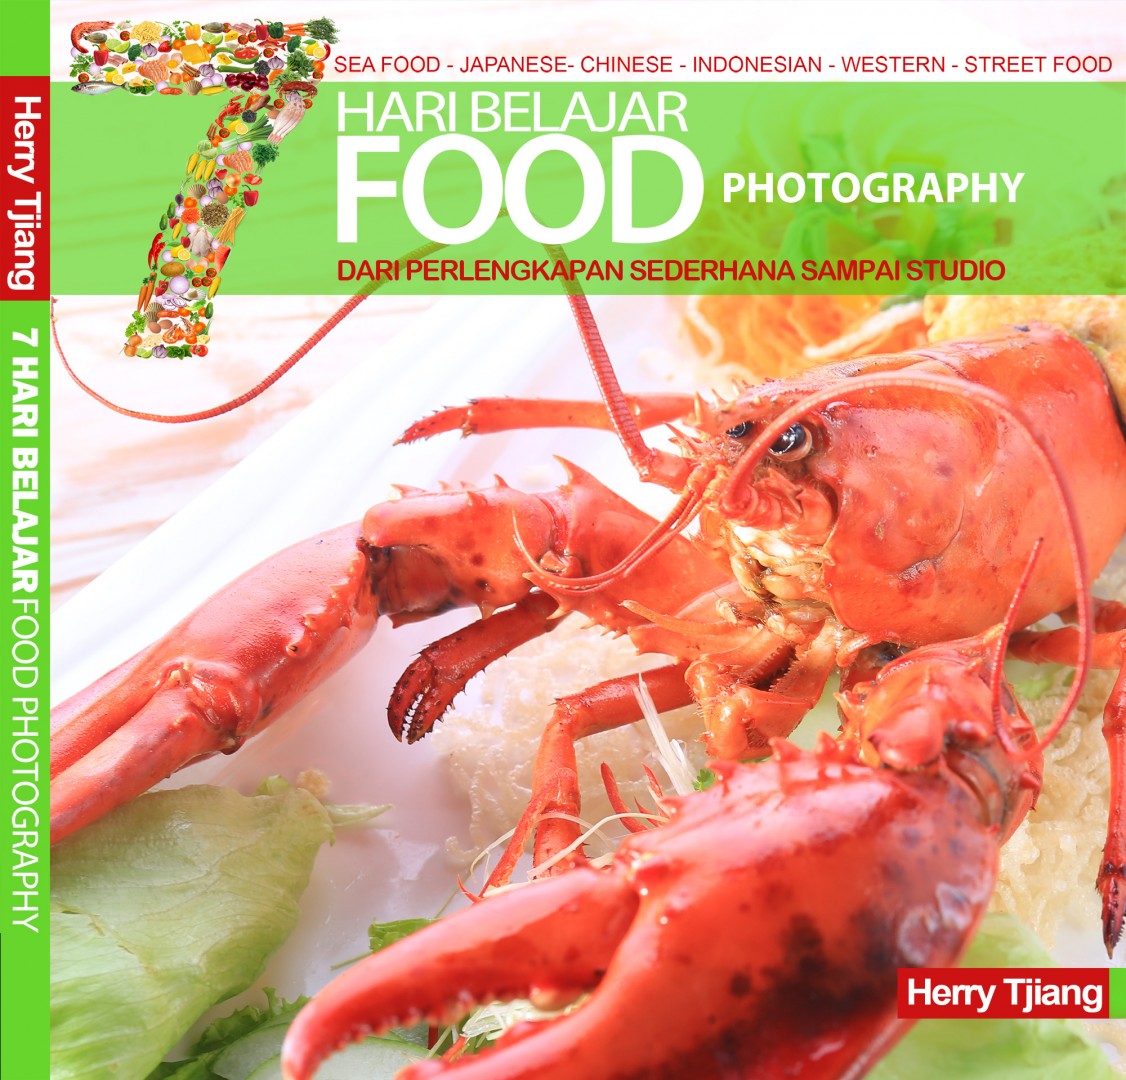 belajar-food-photography